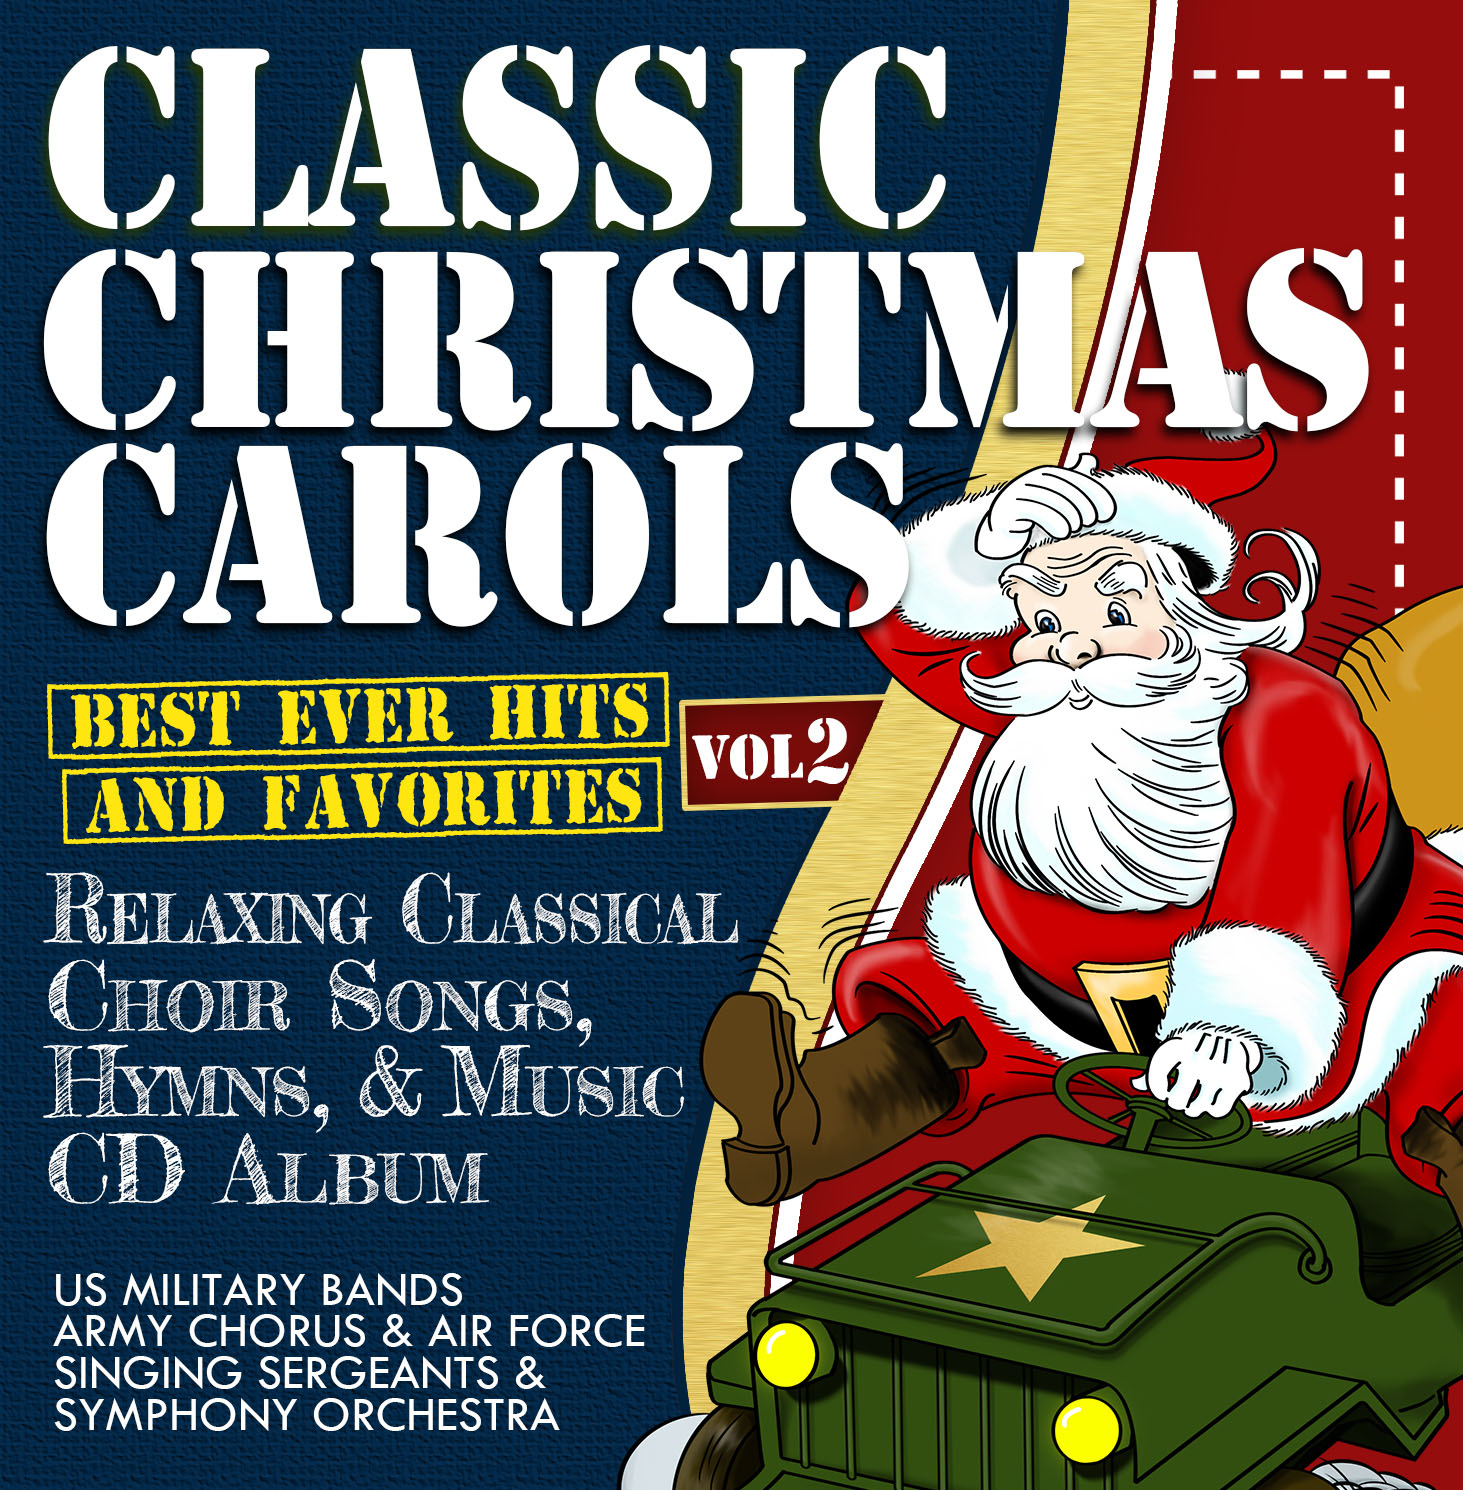 Classic Christmas Carols (Best Ever Hits & Favorites) Volume 2